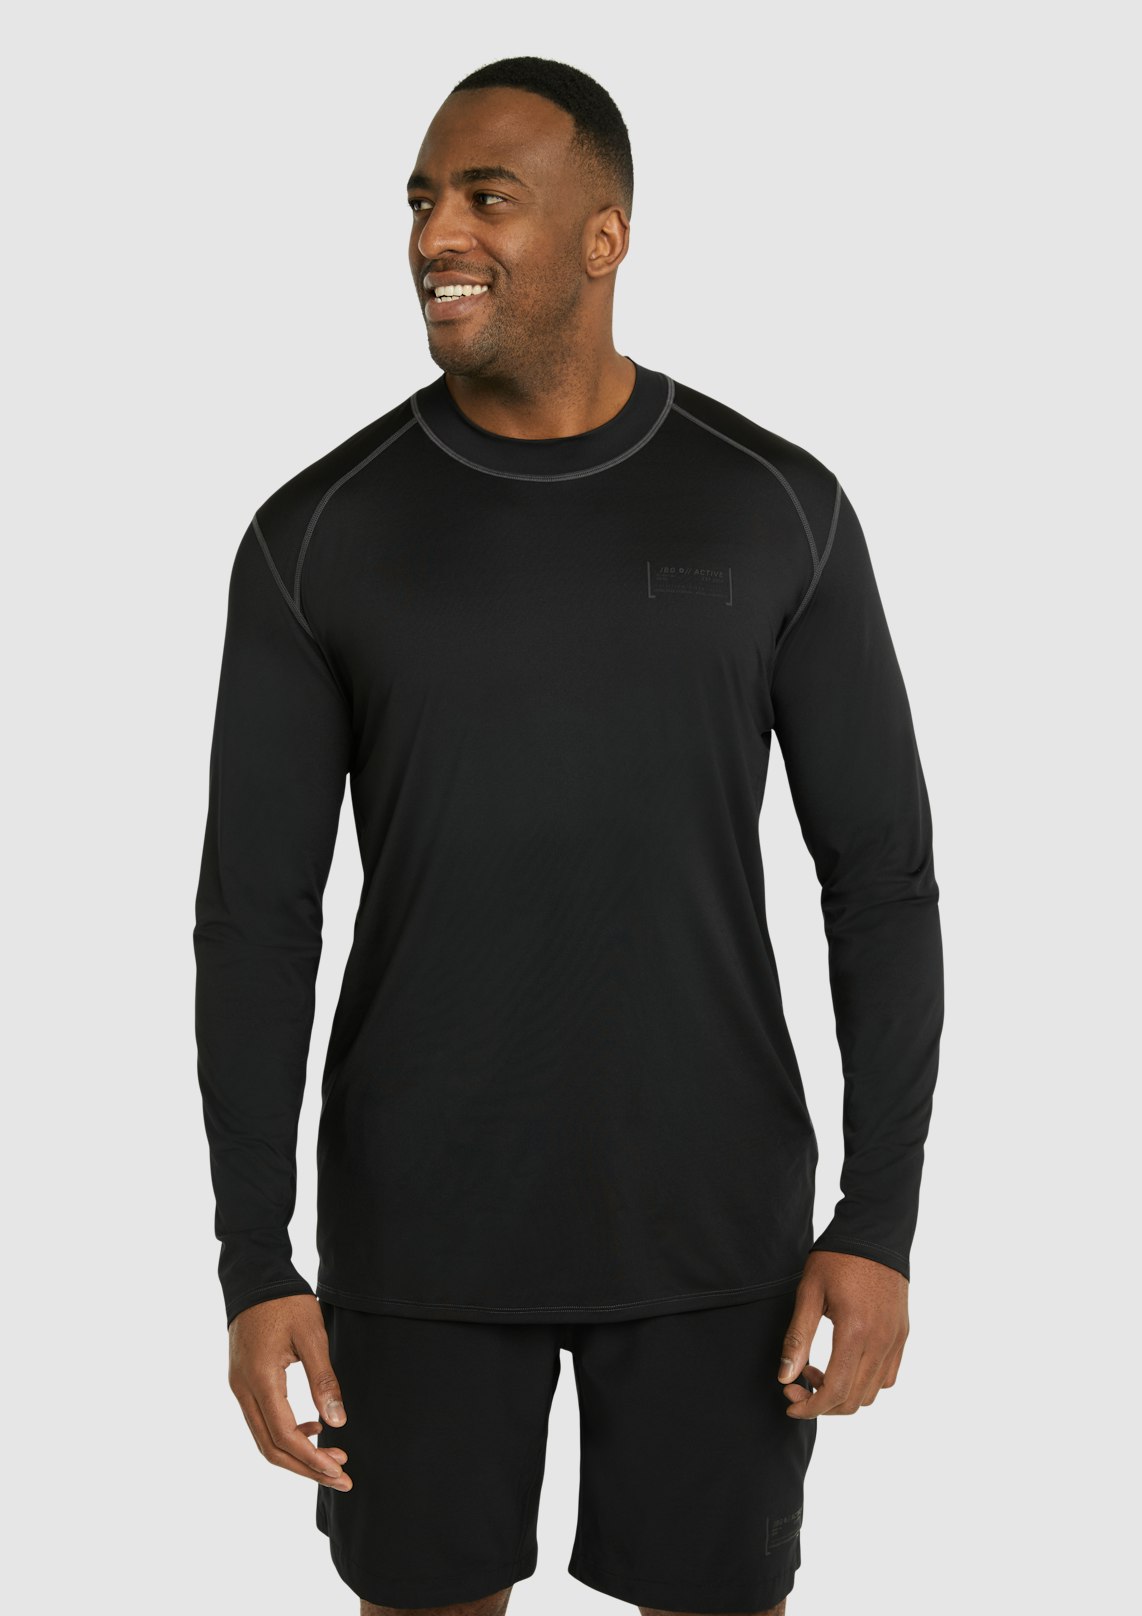 Black Active Long Sleeve Swim Shirt, Men's Tops